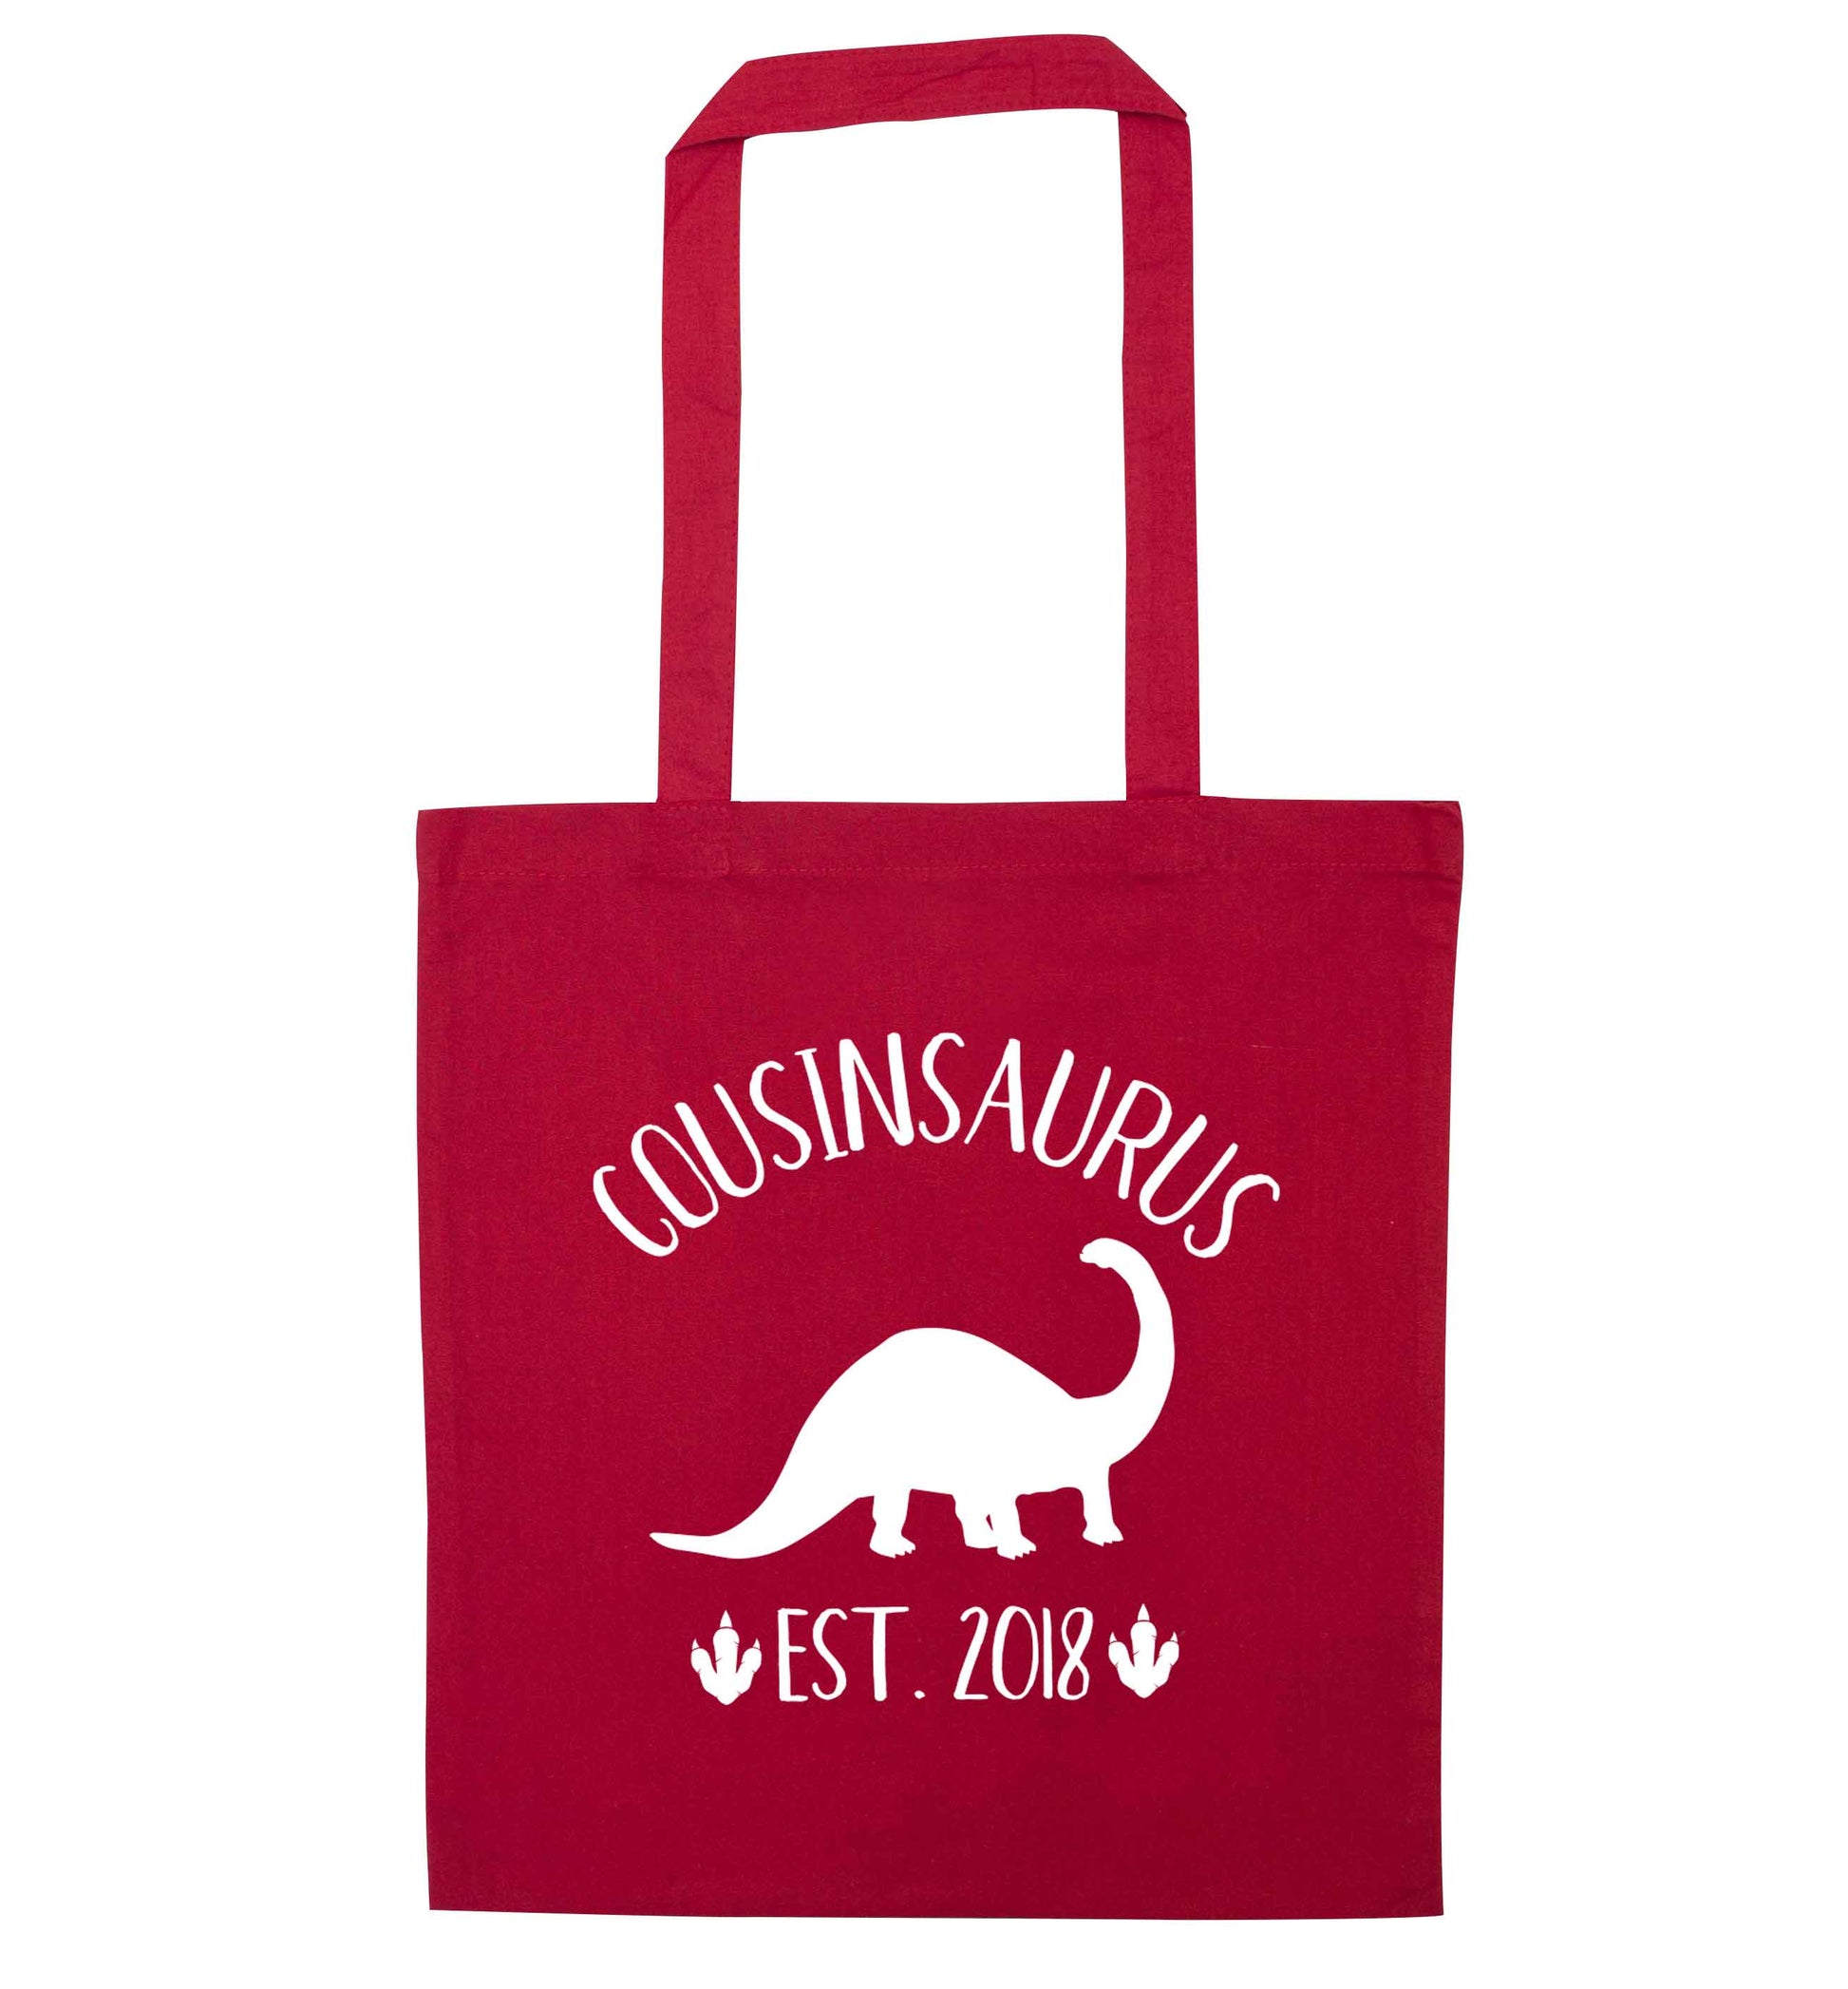 Personalised cousinsaurus since (custom date) red tote bag